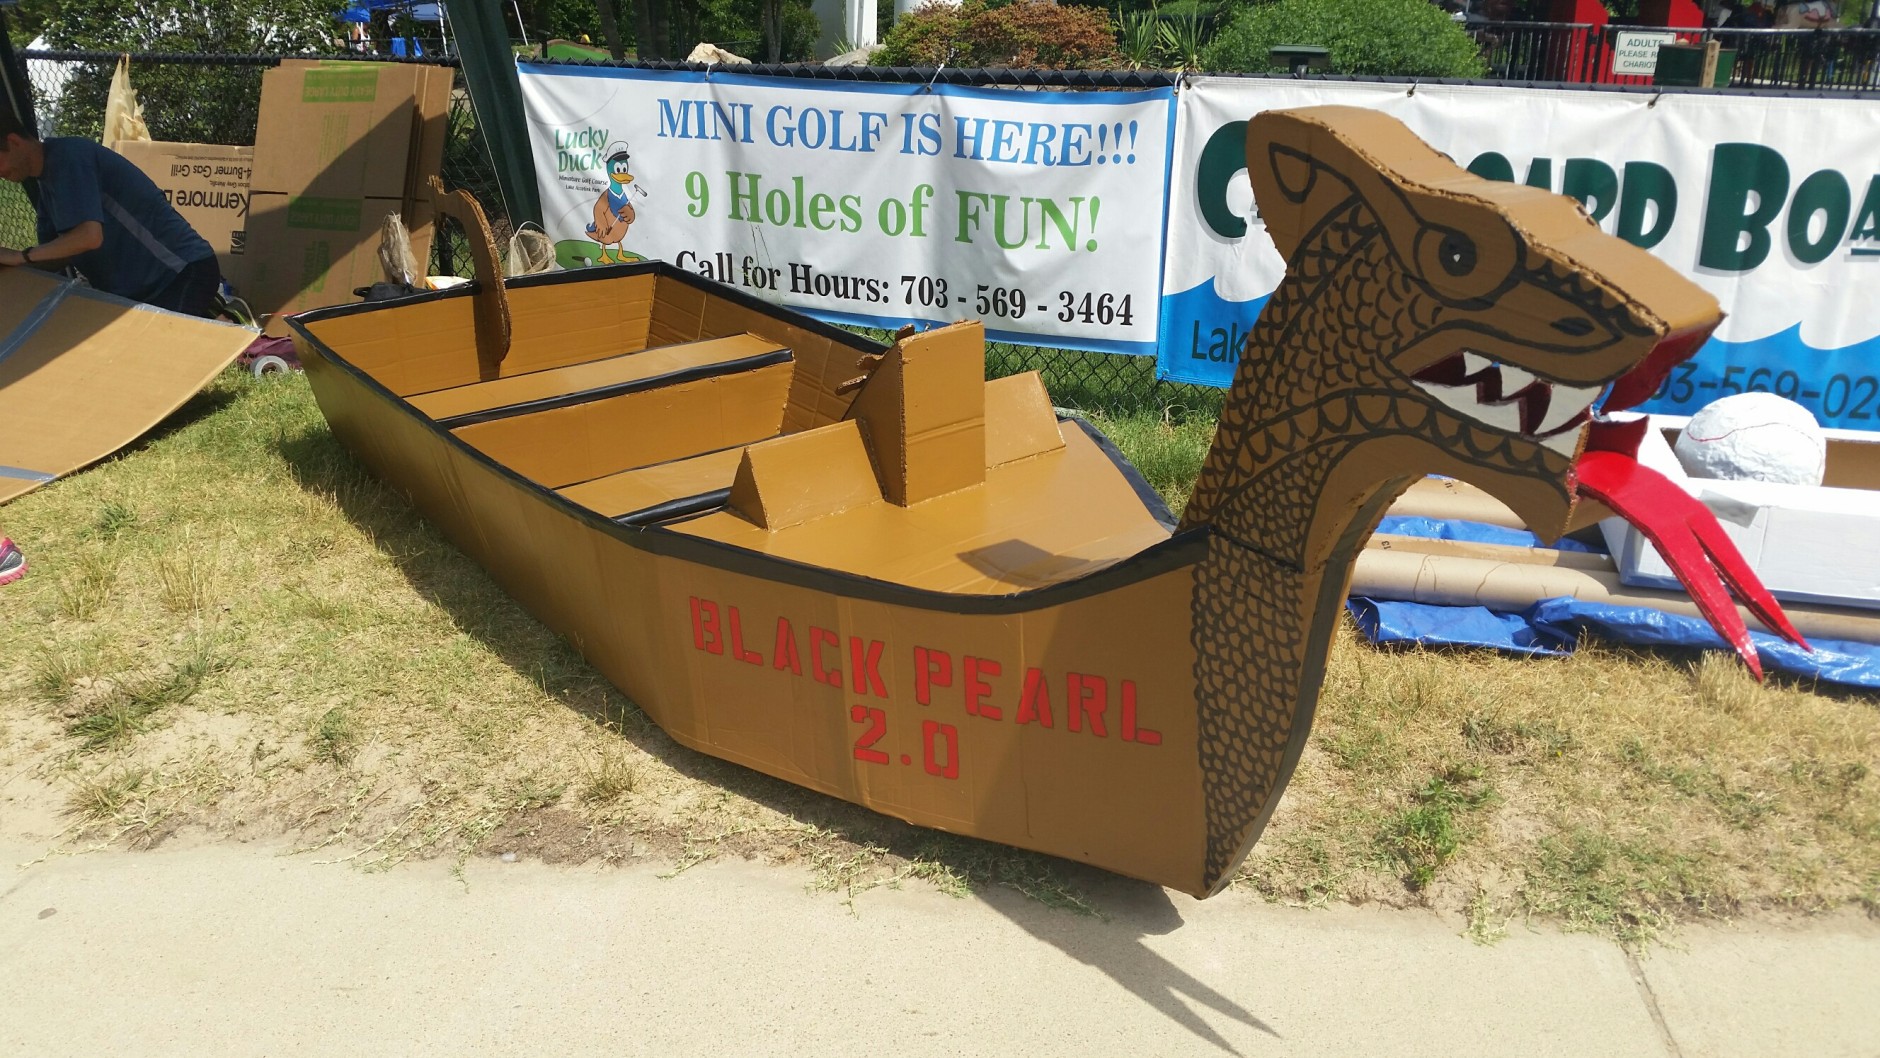 Popular cardboard boat event held Sunday in Va. - WTOP News